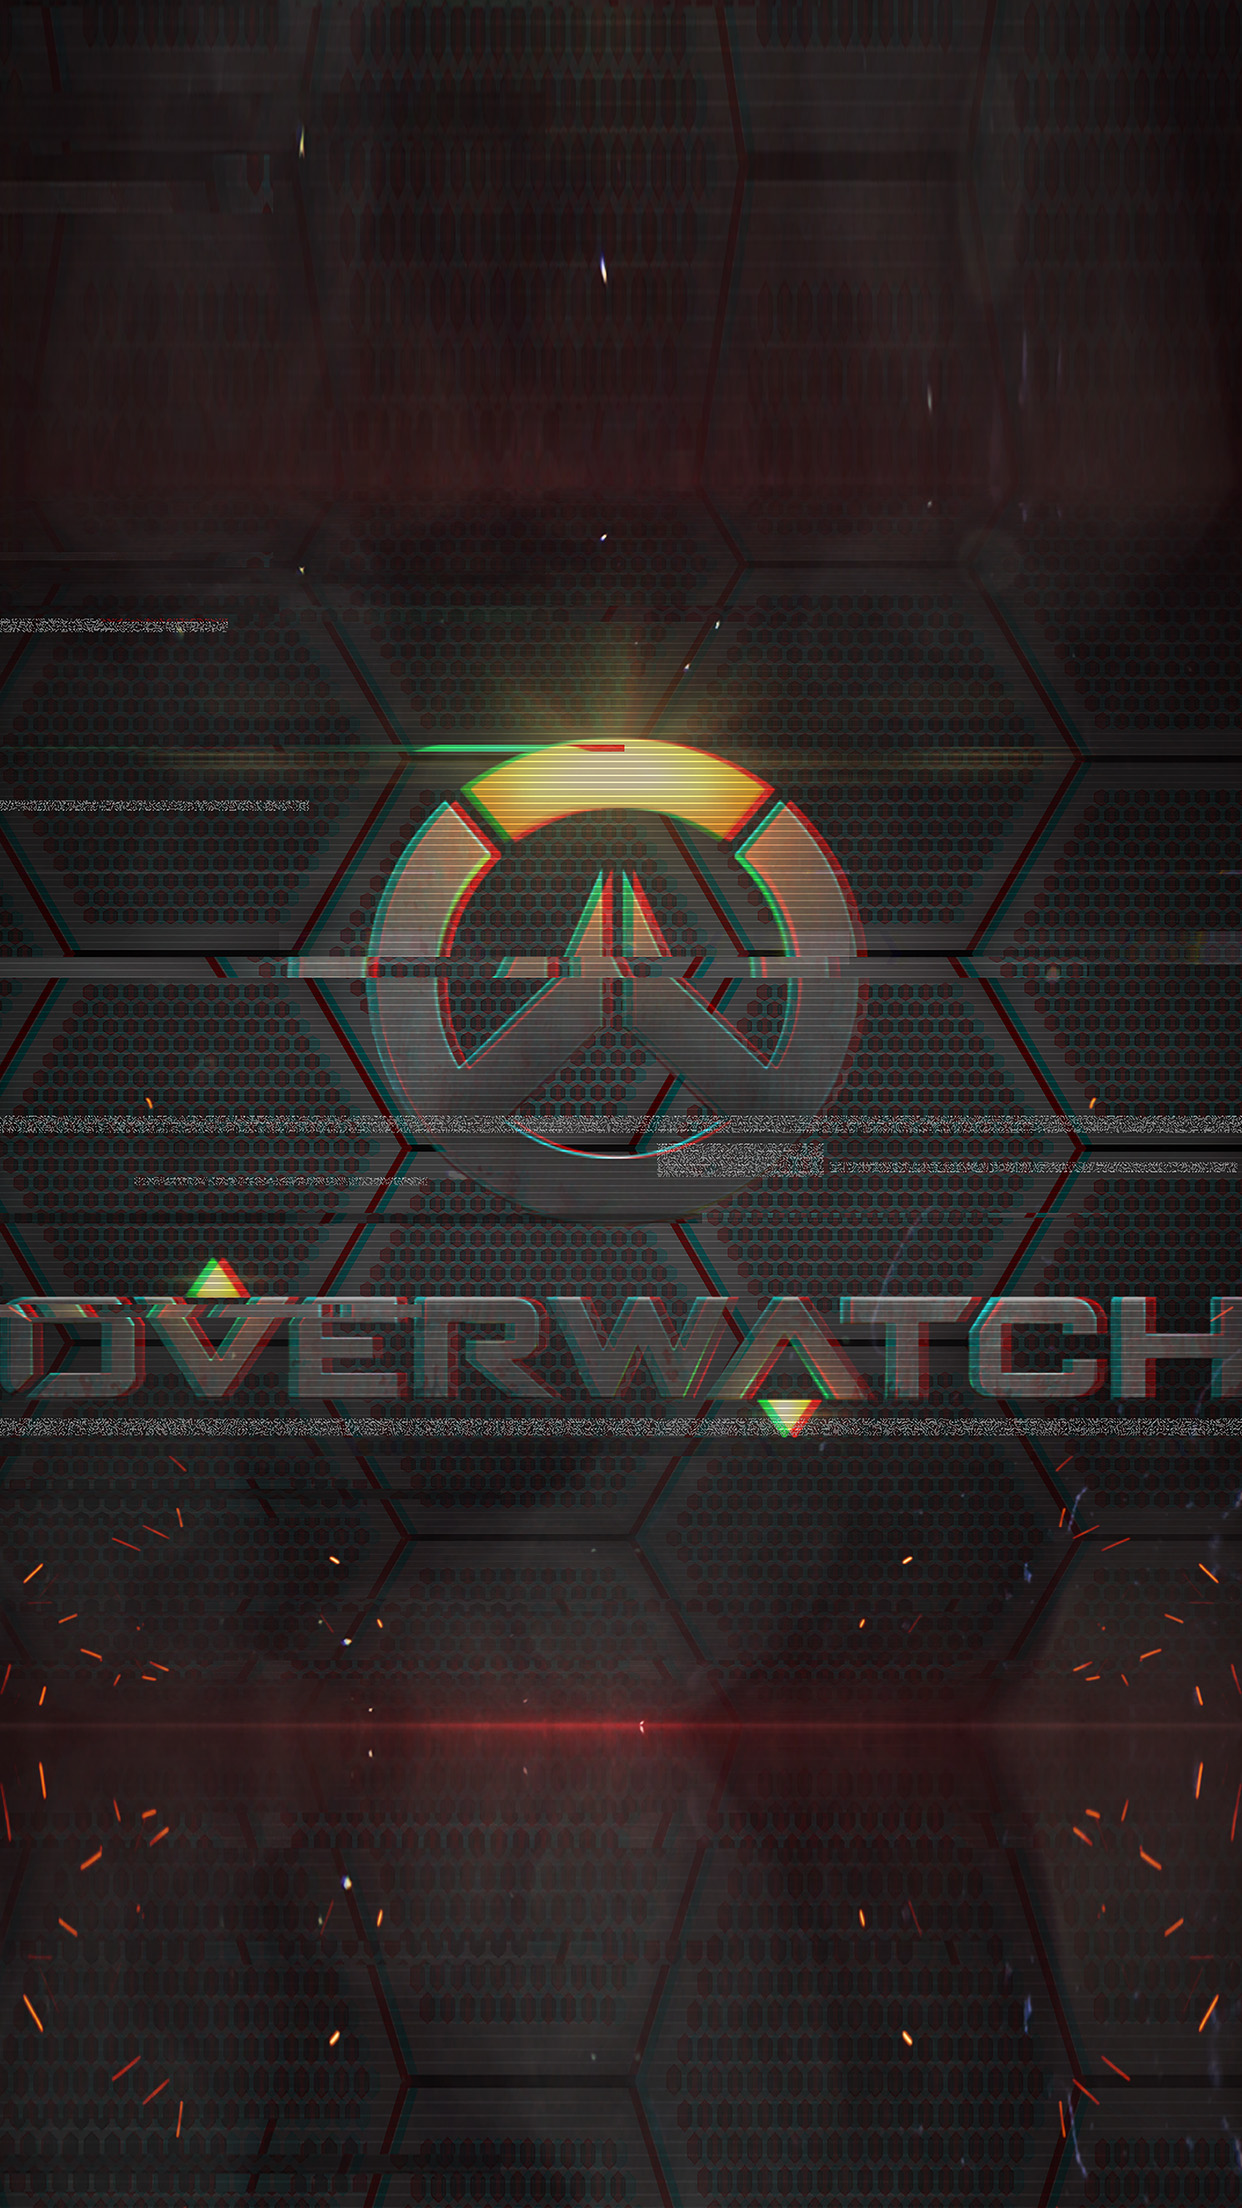 Overwatch Logo Game Art Illustration Android wallpaper